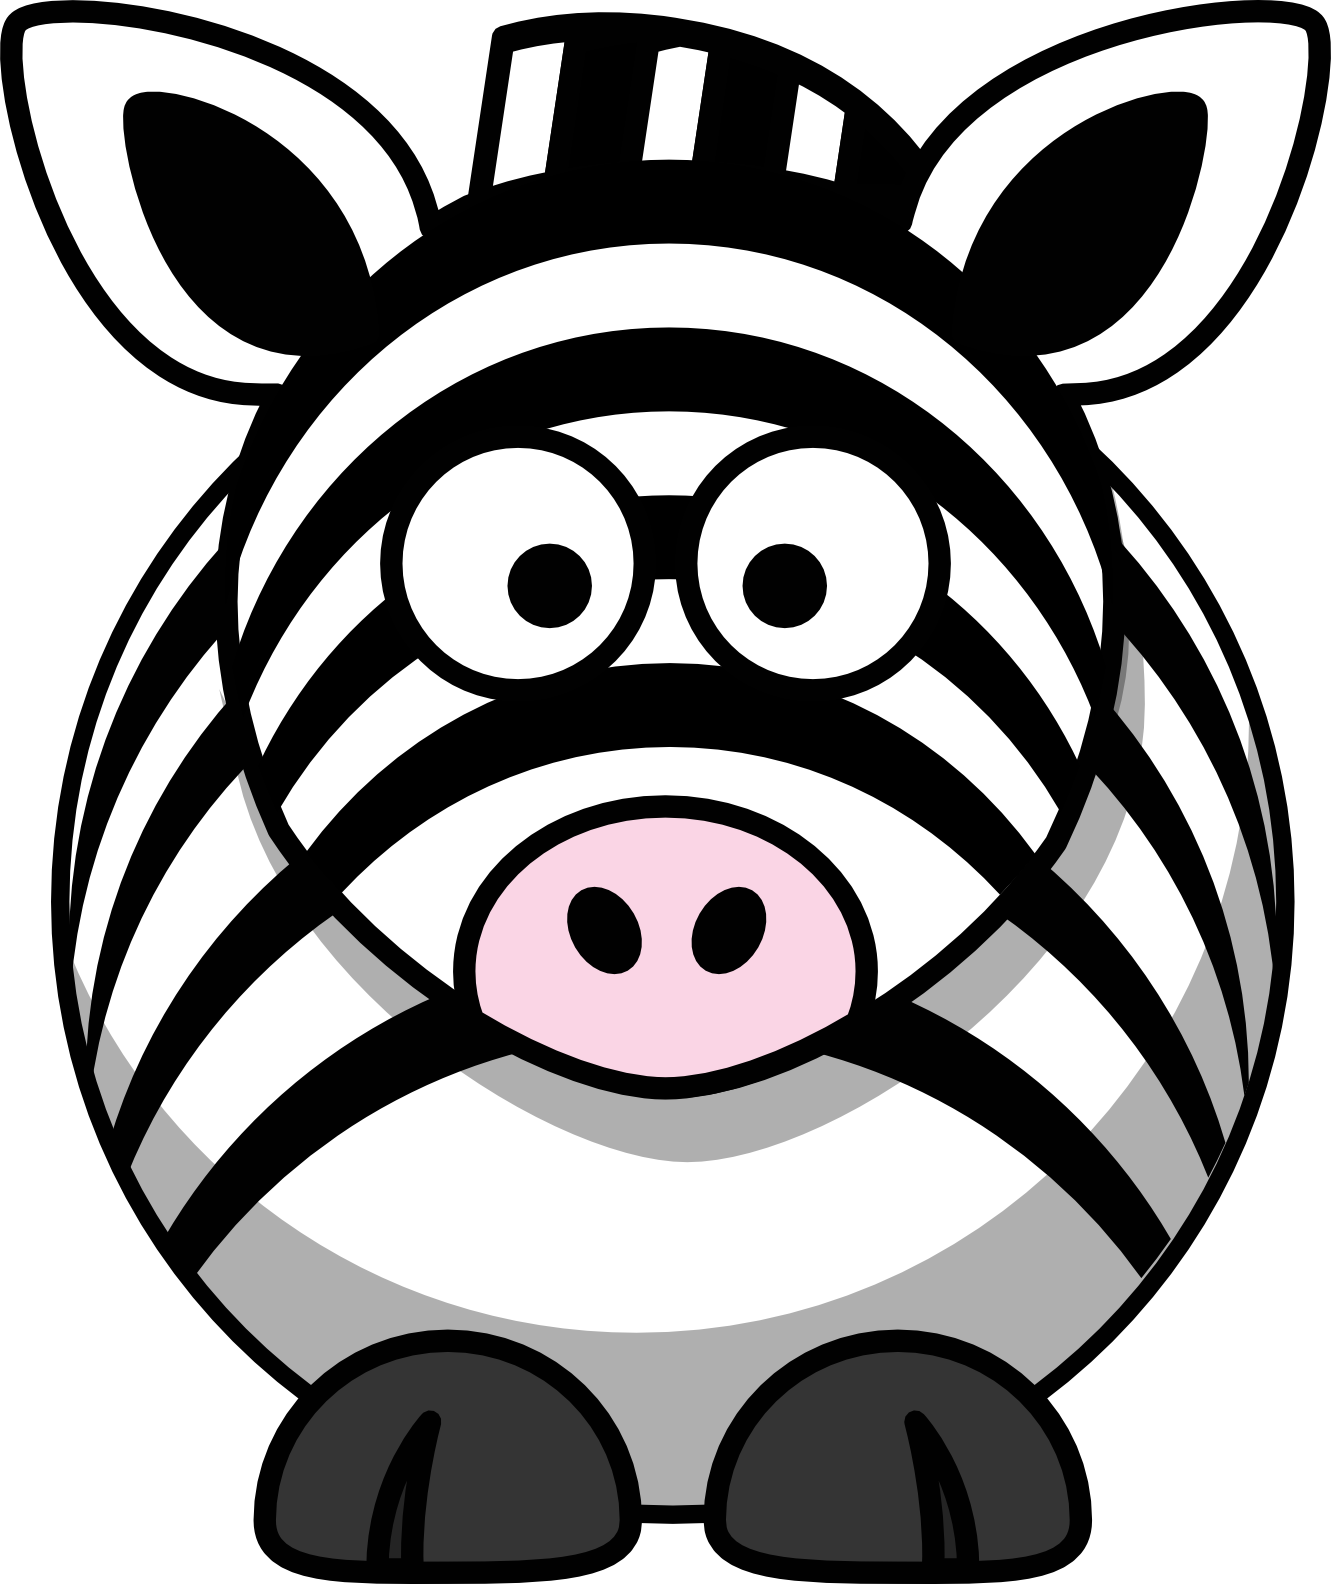 Zebra Peace Sign Clipart | Clipart Panda - Free Clipart Images